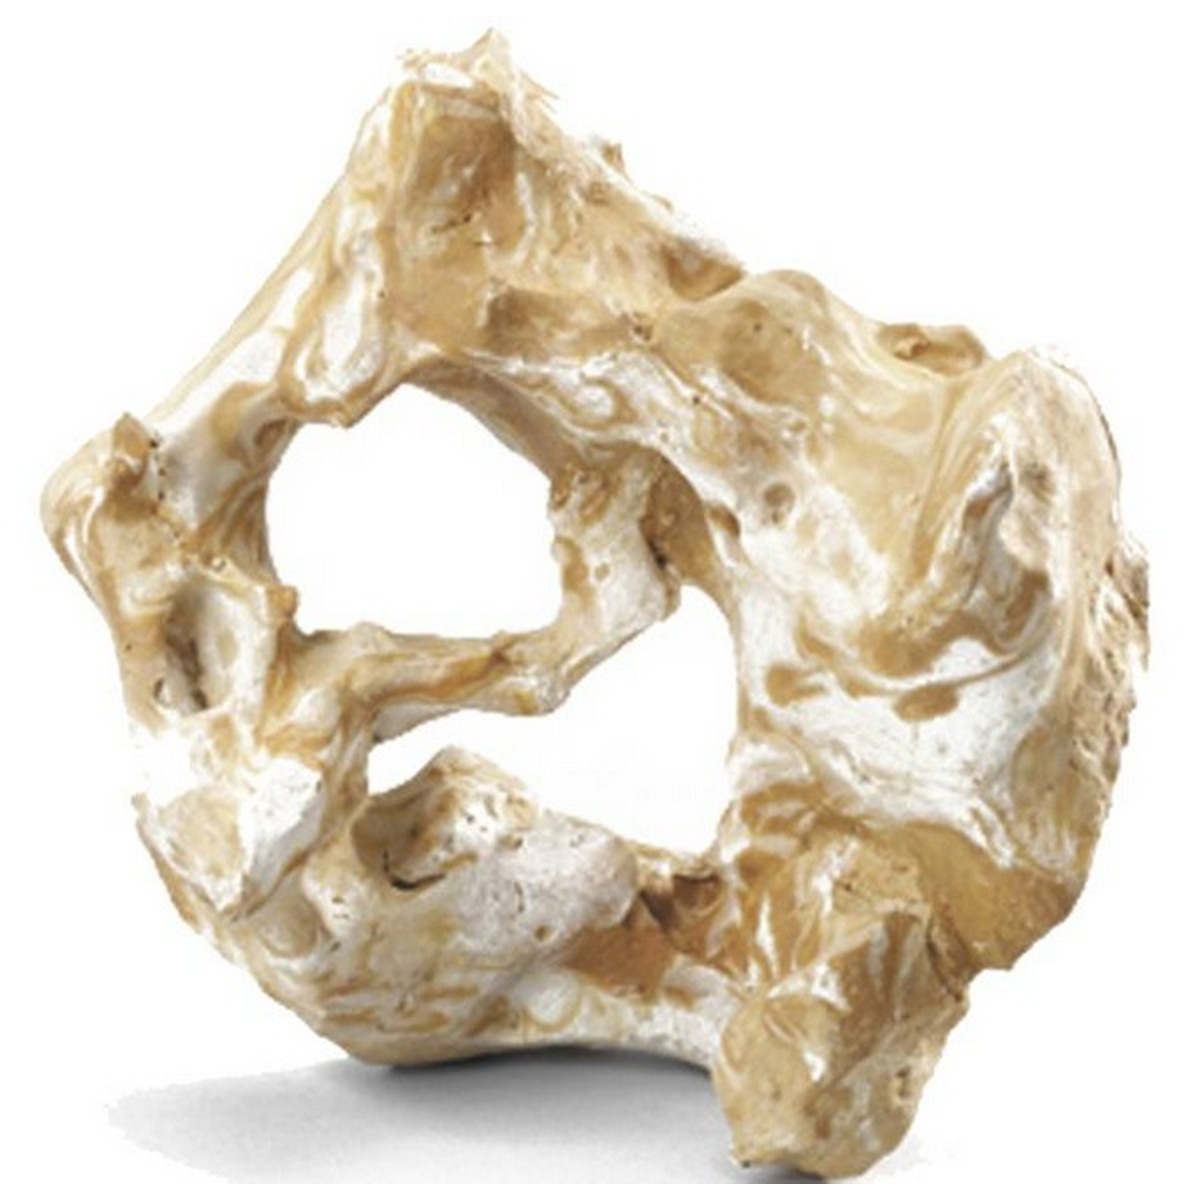   Décor-pierre Combo-Fellas L285x205x275mm  28,5x20,5x27,5cm